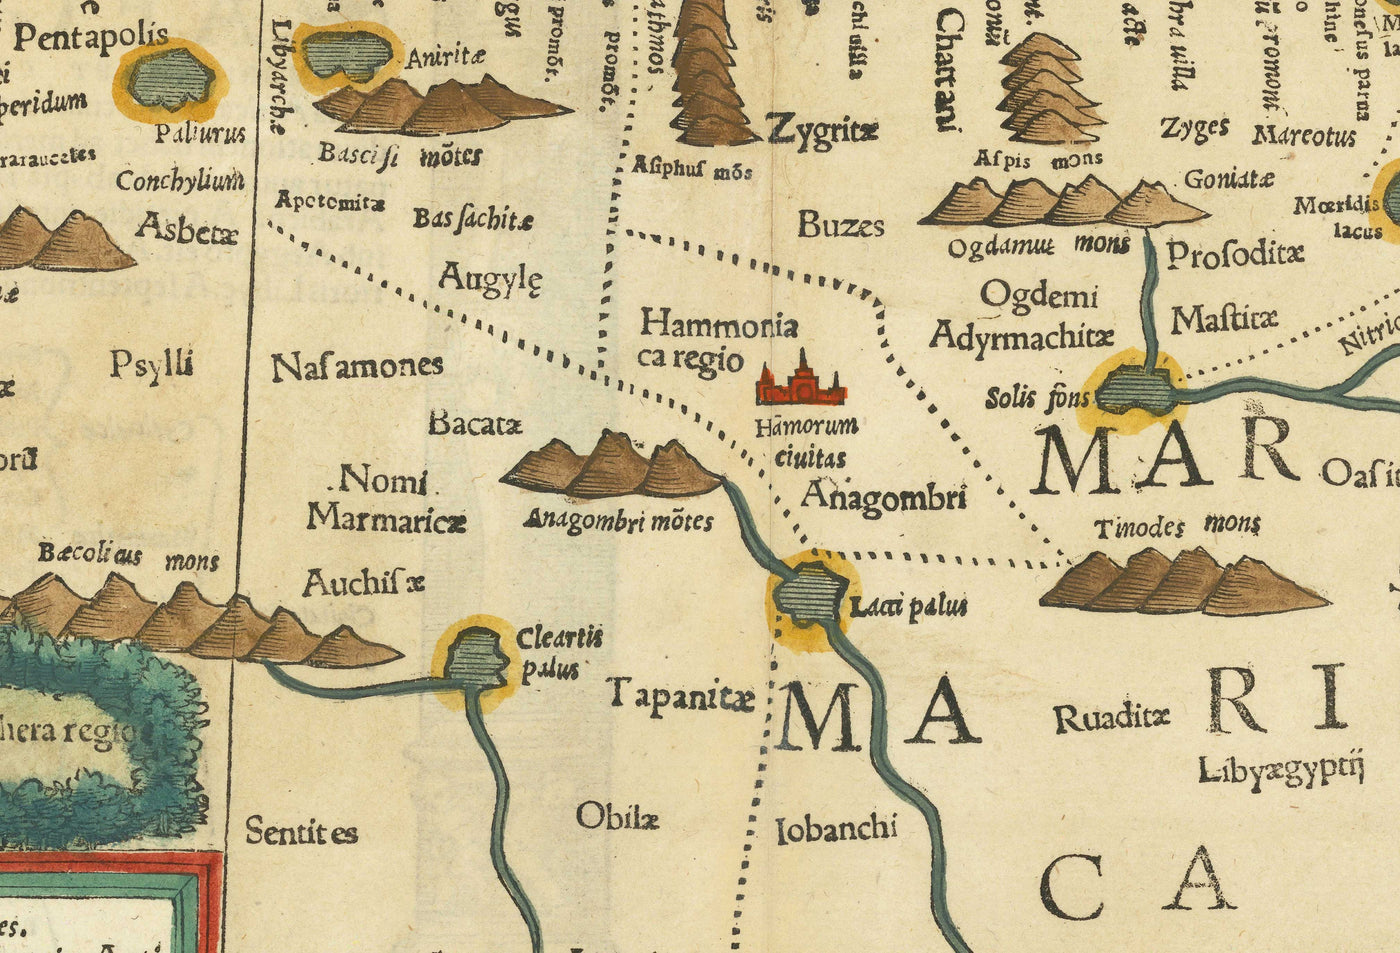 Old Historical Map of North Africa in 1545 by Sebastian Munster - Babylon, Cairo, River Nile, Alexandria, Egypt